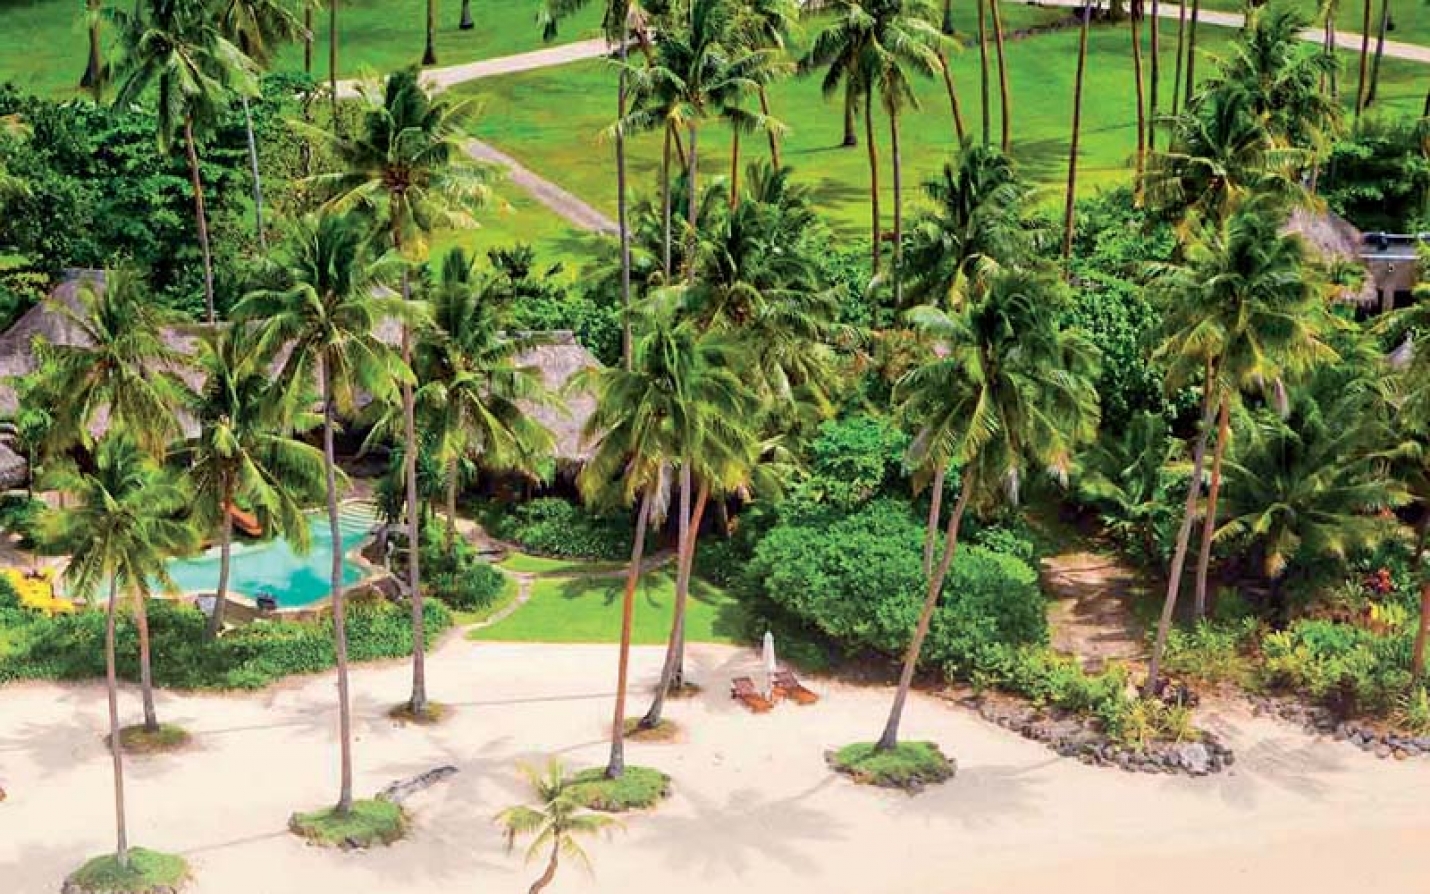 NOUVELLE ZELANDE - FIDJI :  Laucala Island Resort,  luxe et prestige assurés